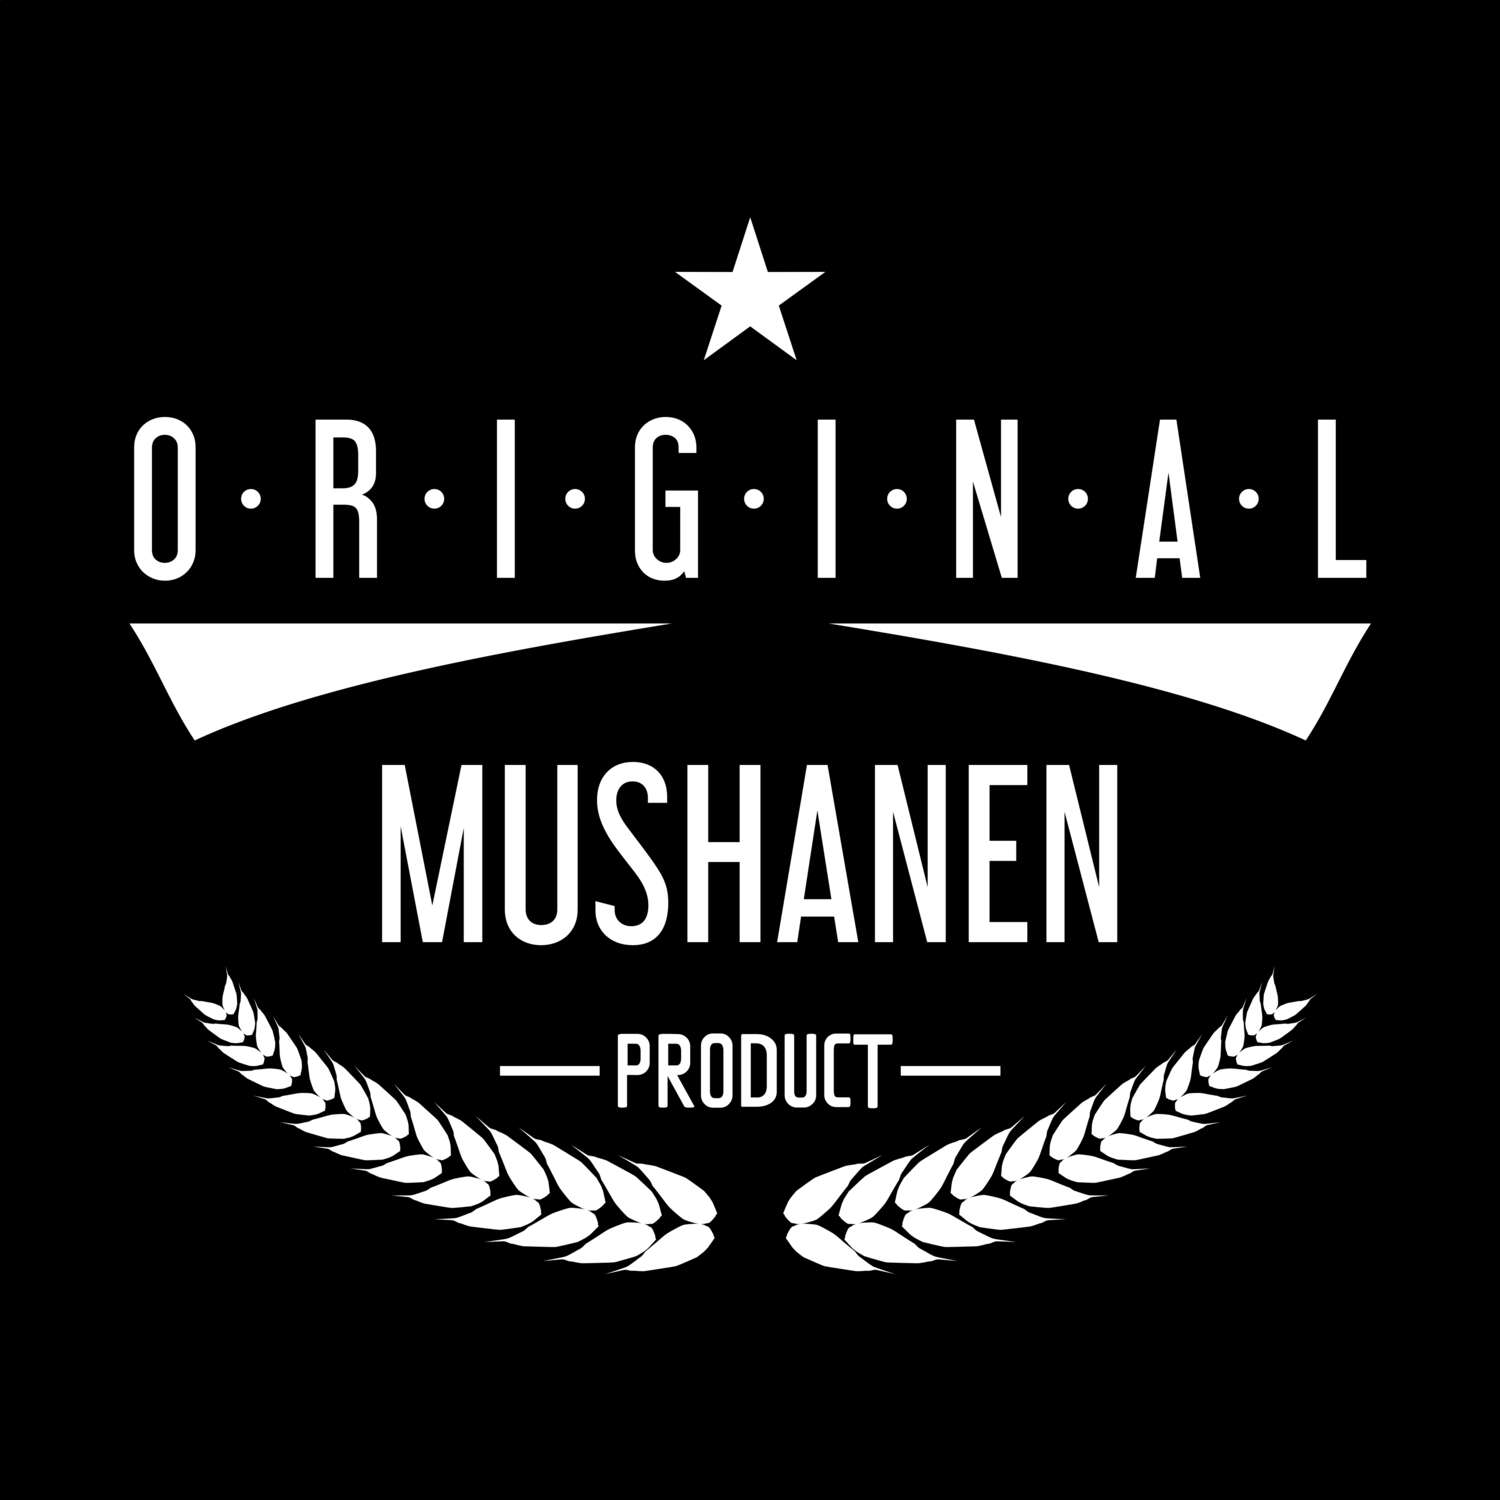 Mushanen T-Shirt »Original Product«